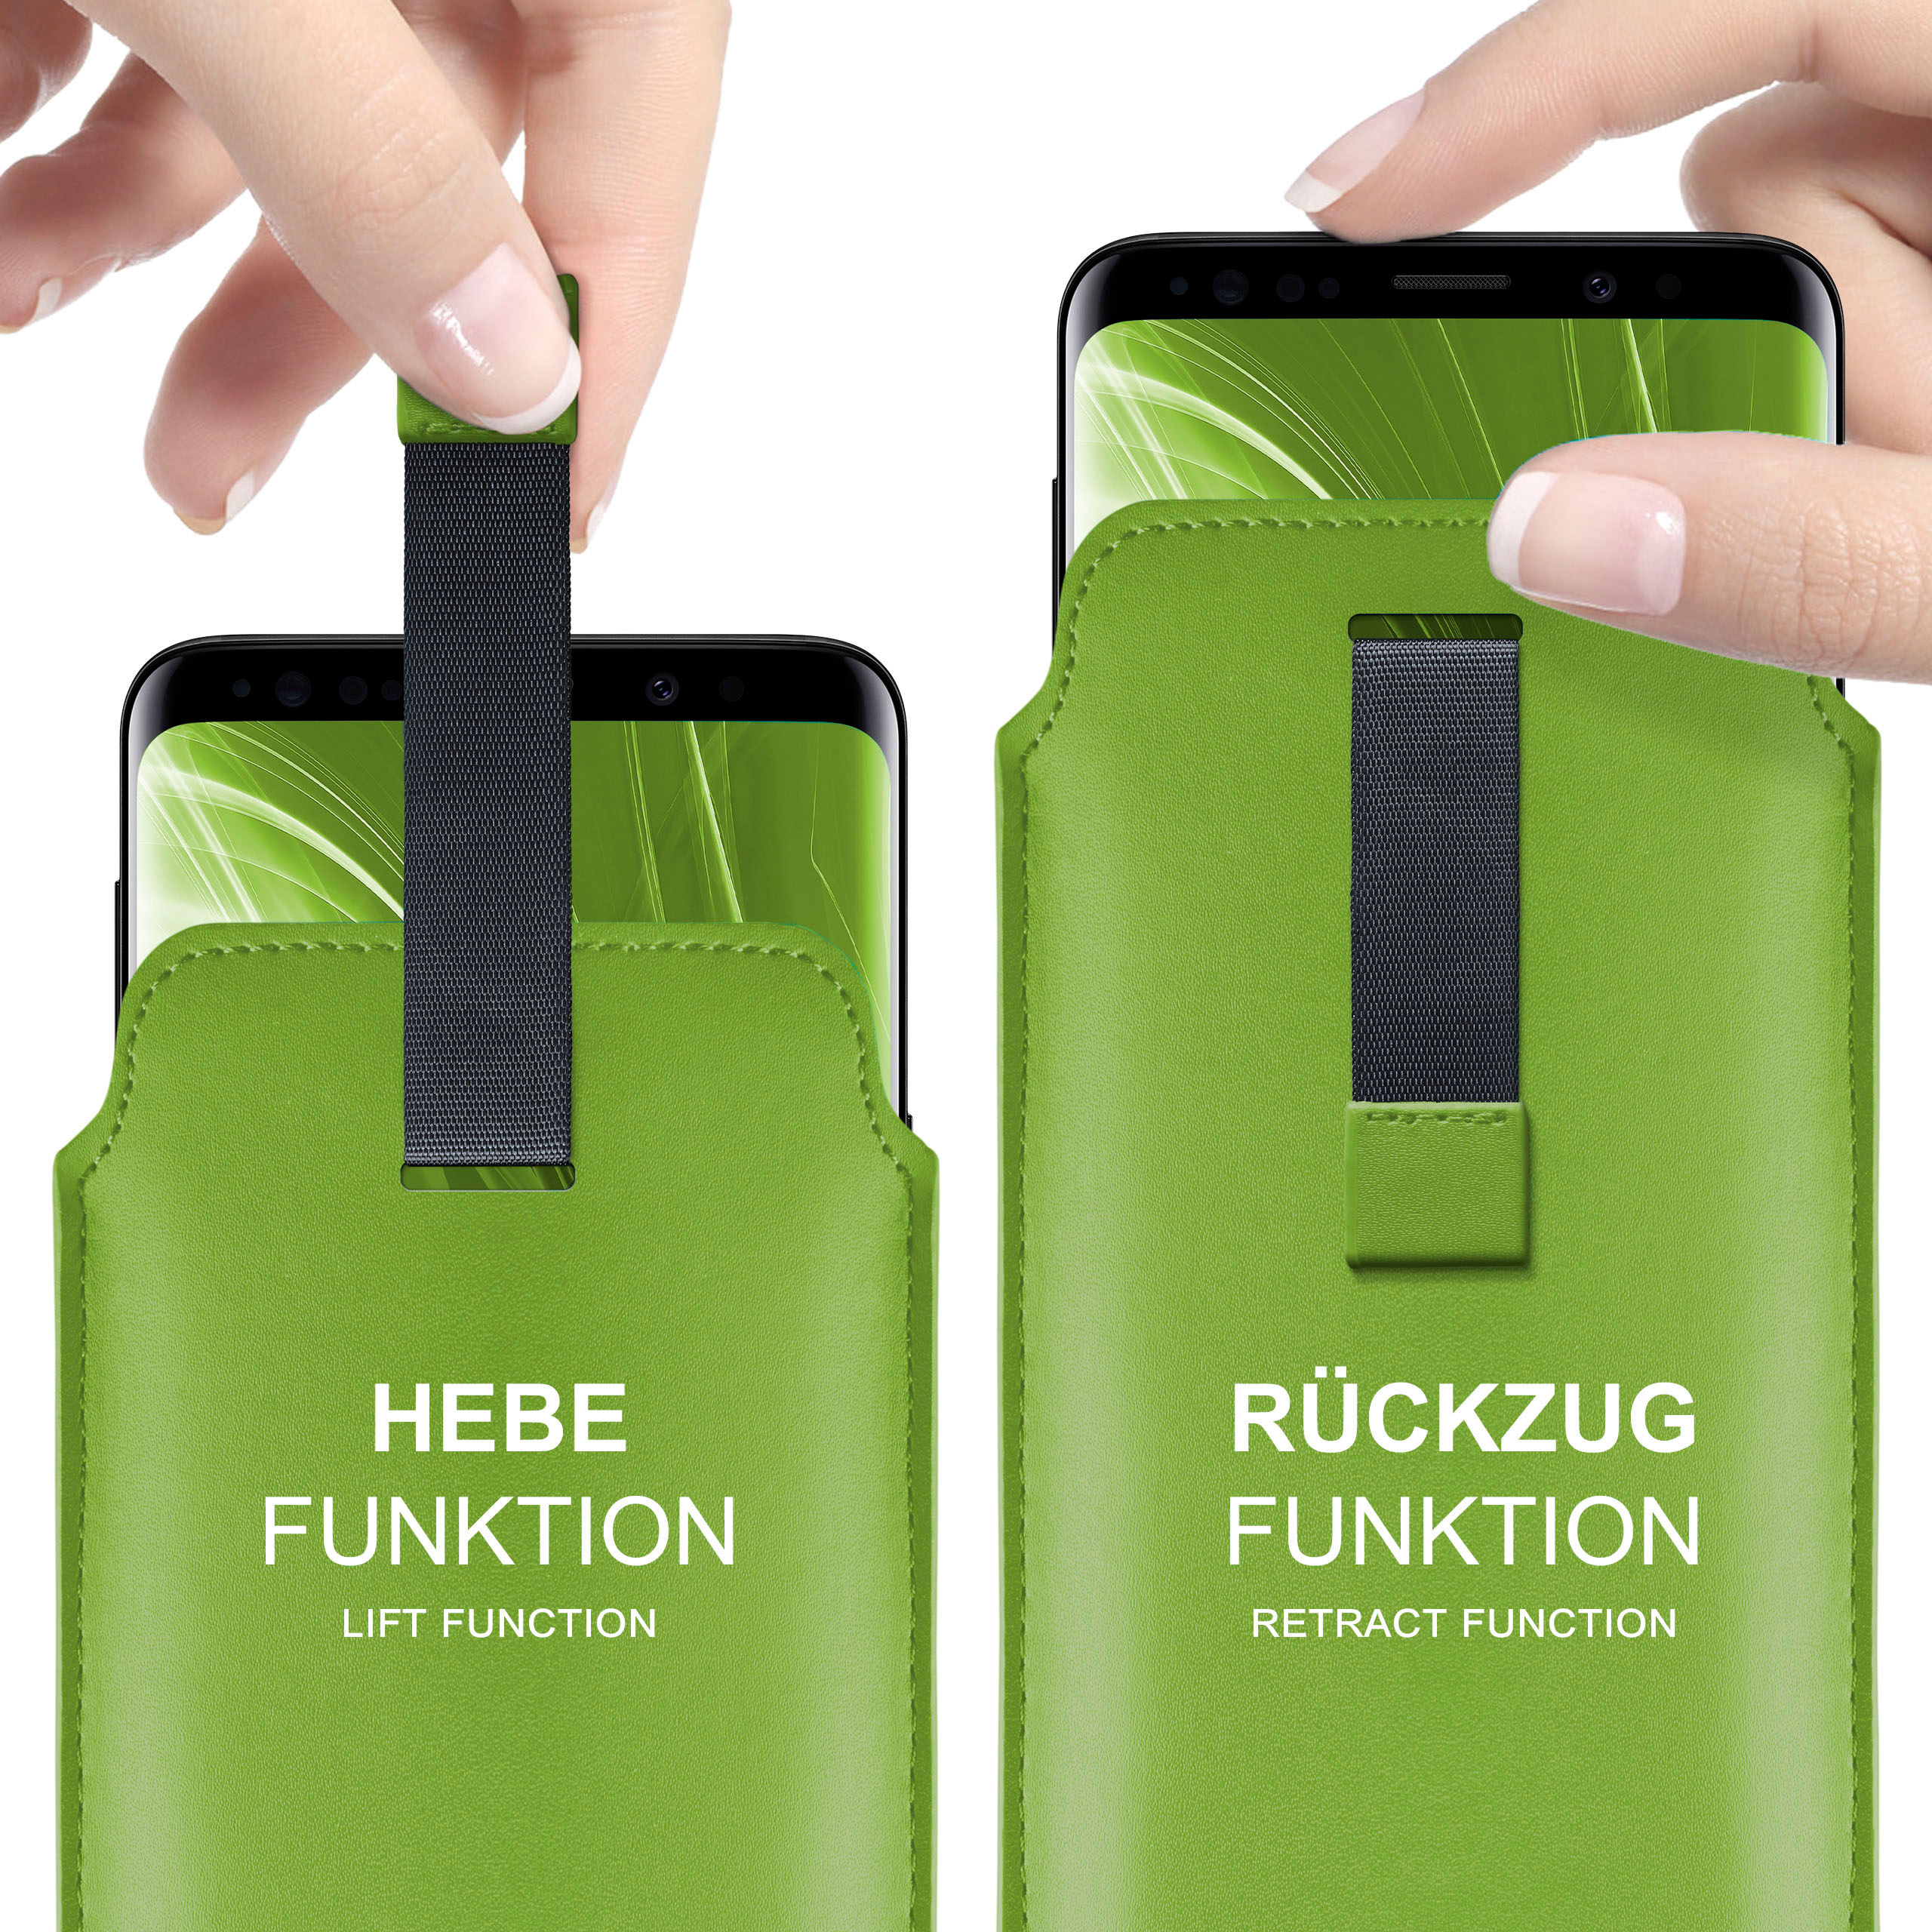 MOEX Slide Huawei, Lime-Green Full Case, Cover, P8